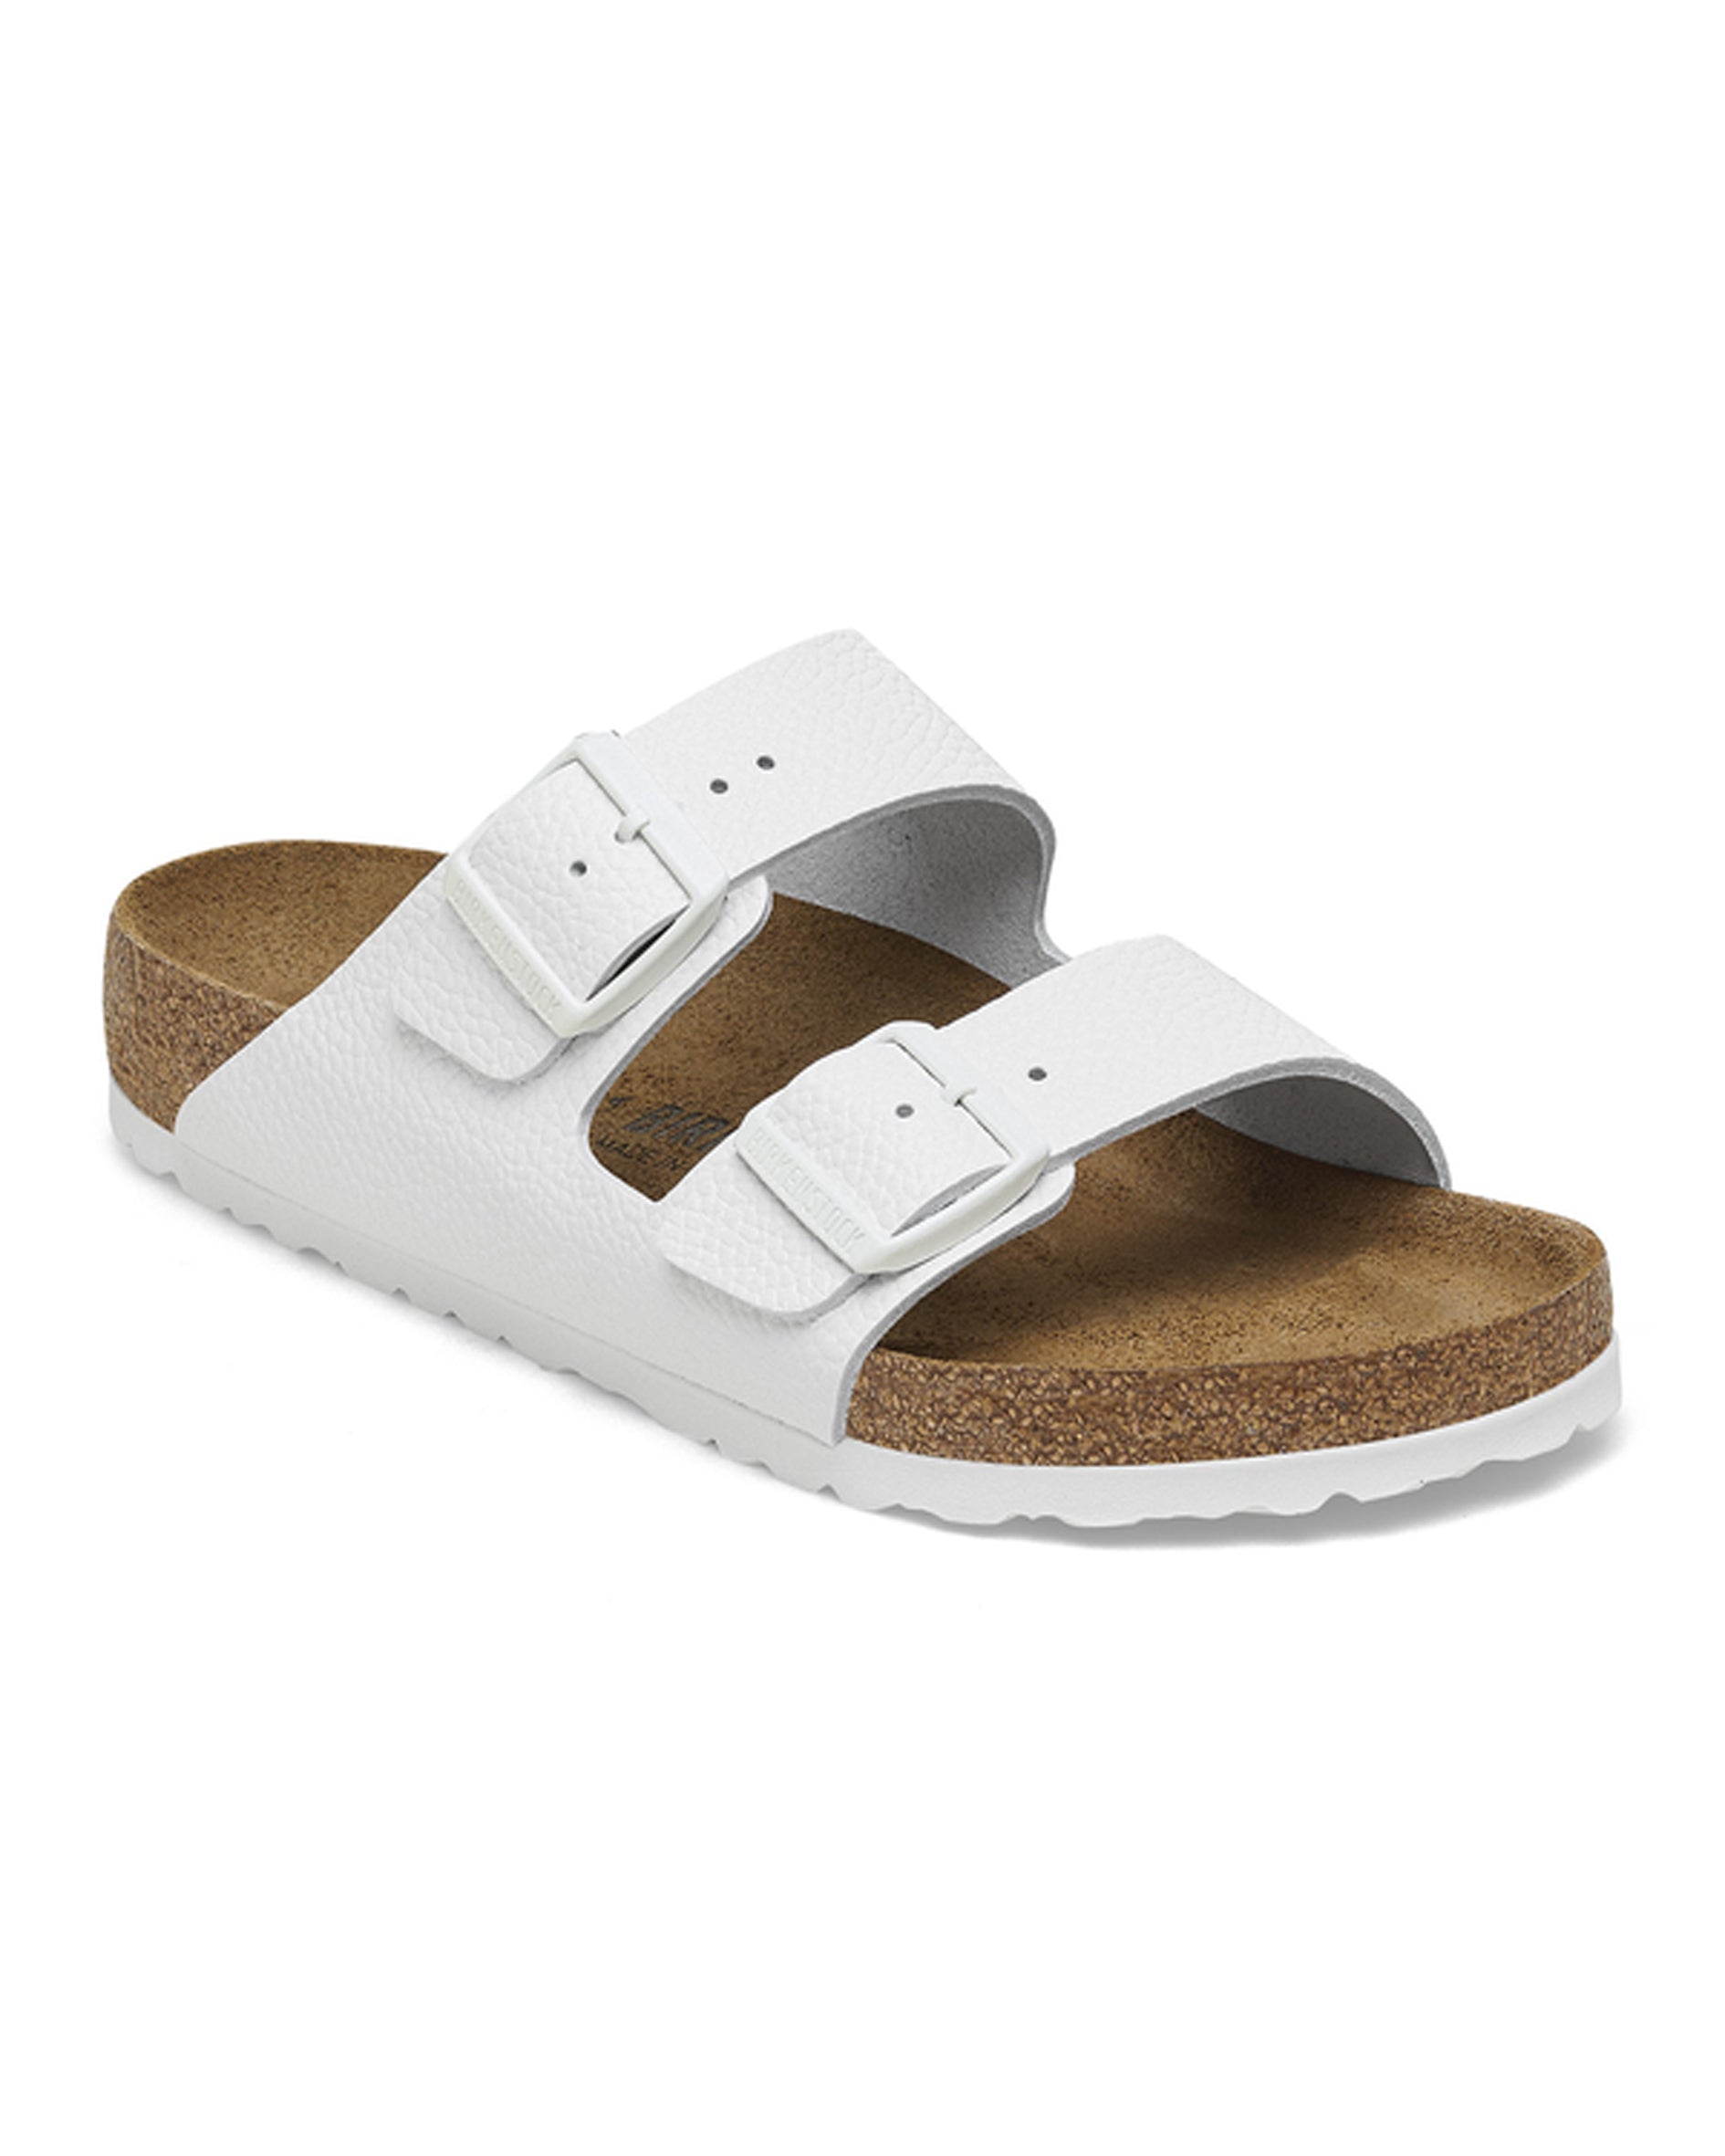 Arizona White Leather Sandals